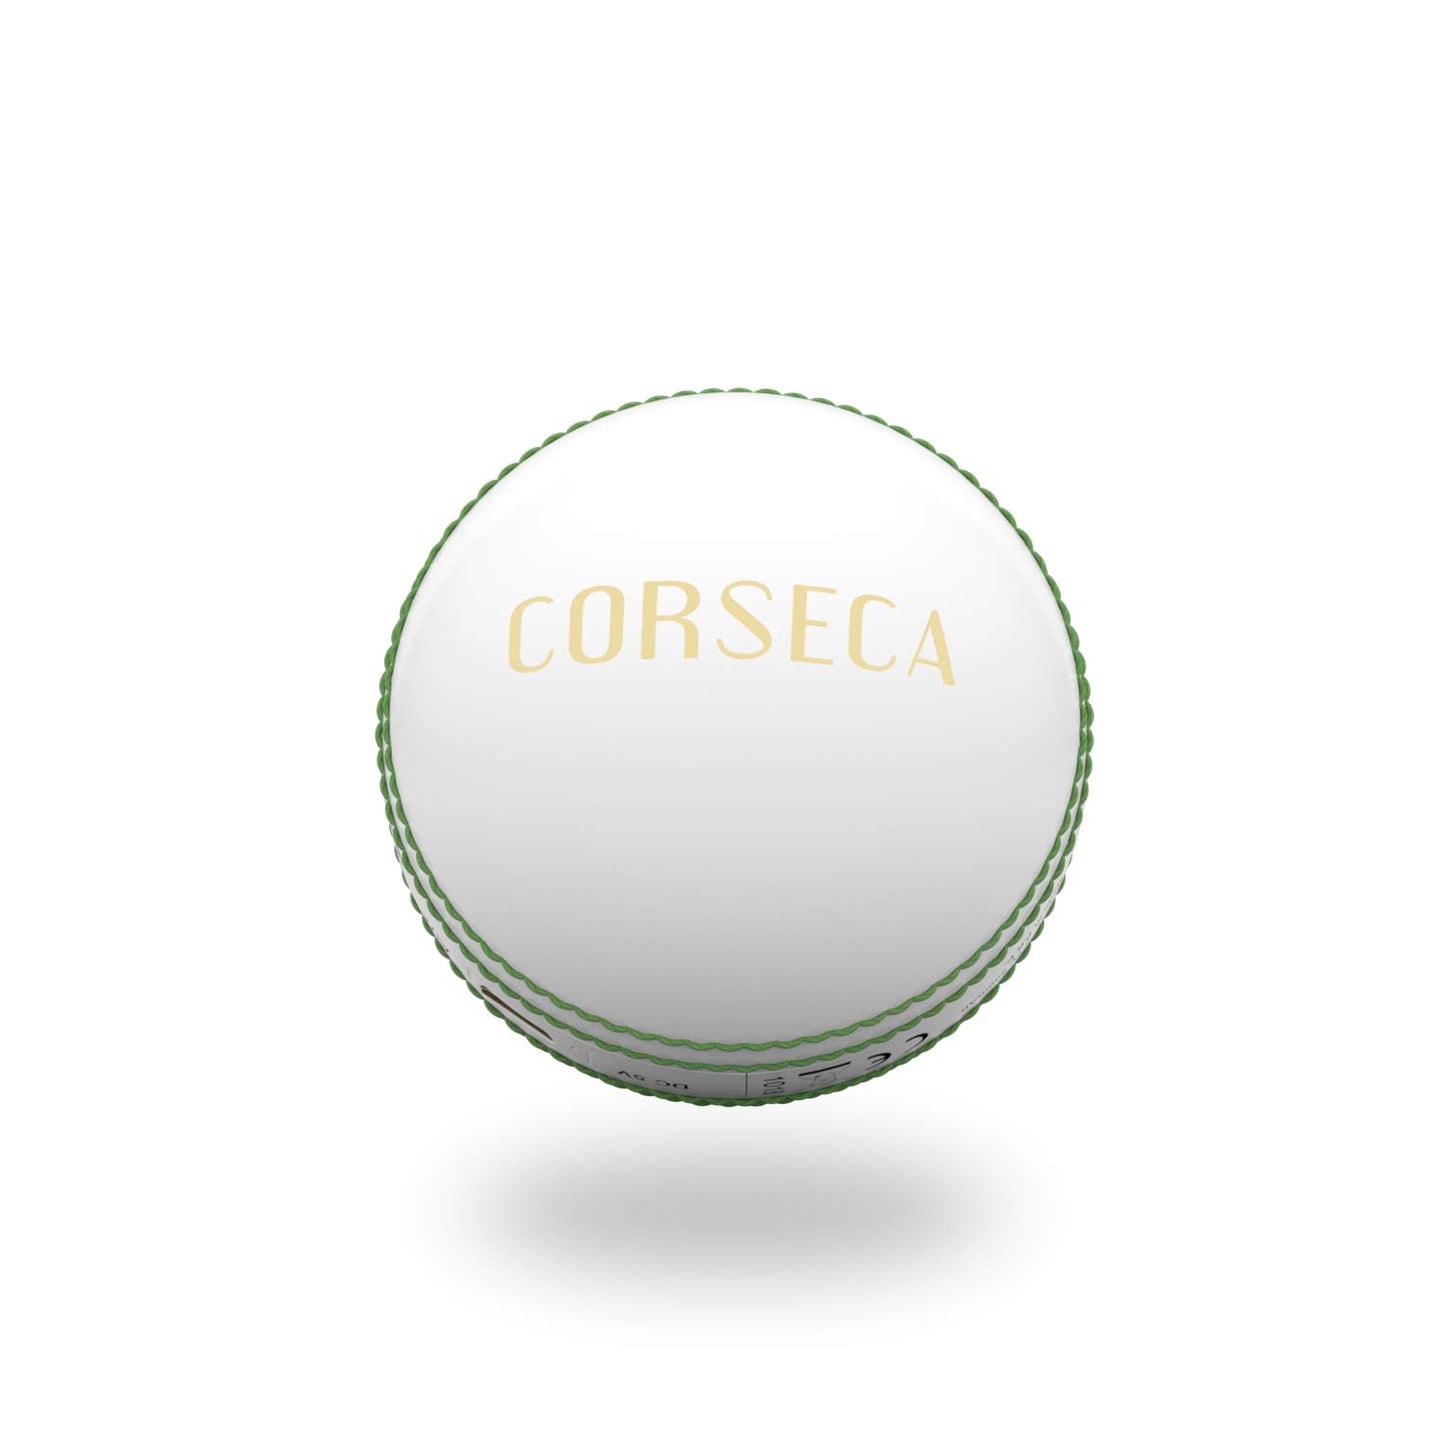 कोर्सेका ओर्ब क्रिकेट बॉल पोर्टेबल वायरलेस ब्लूटूथ स्पोर्ट्स स्पीकर